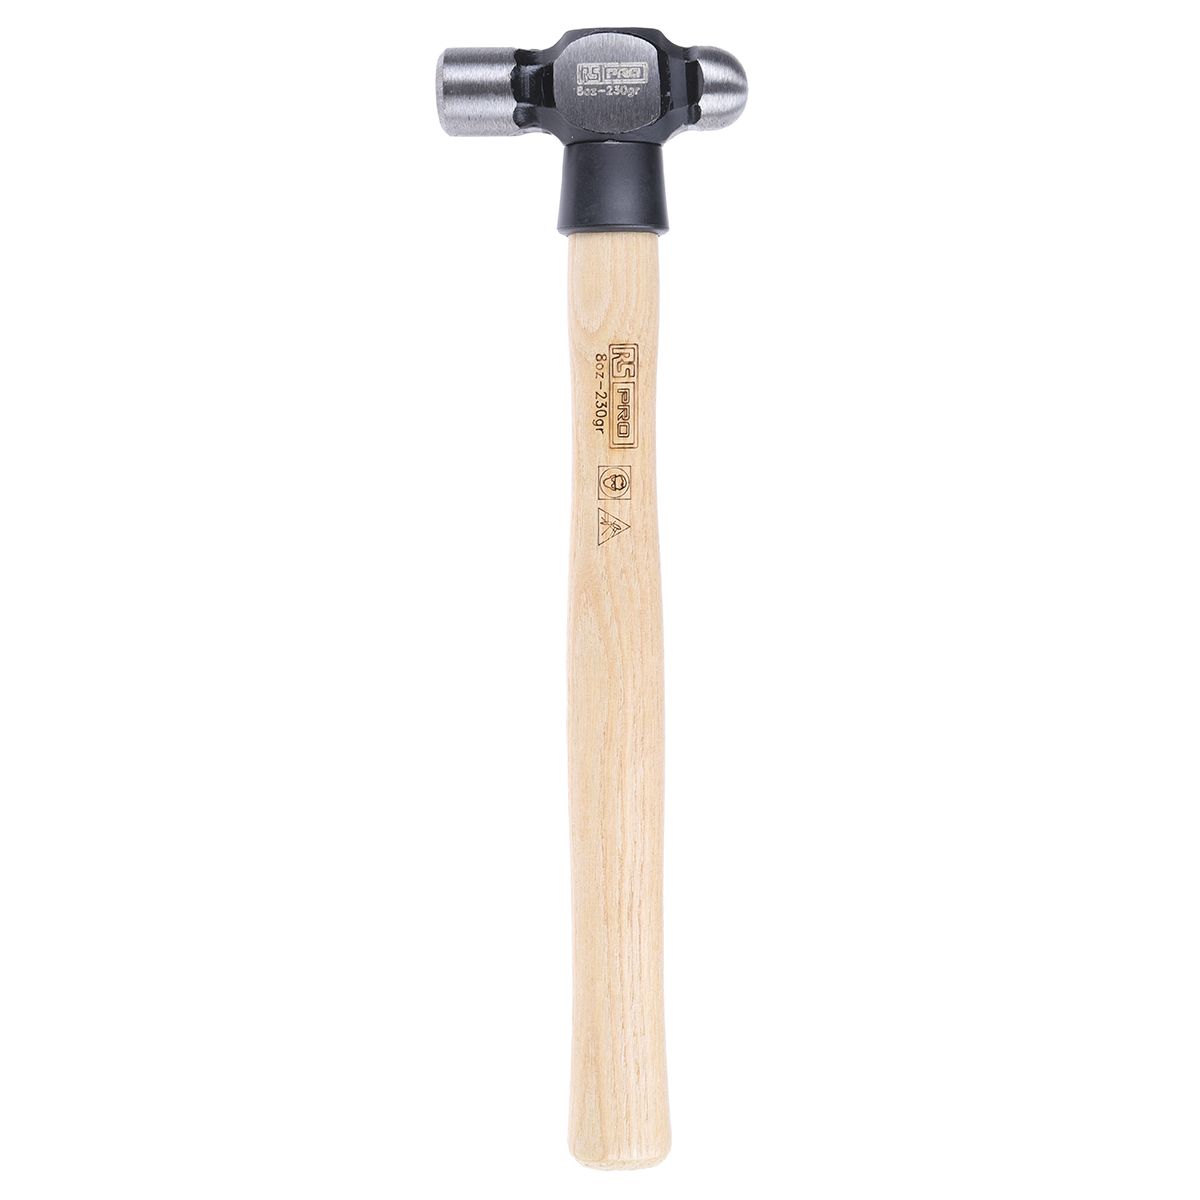 RS PRO Steel Ball-Pein Hammer, 318g